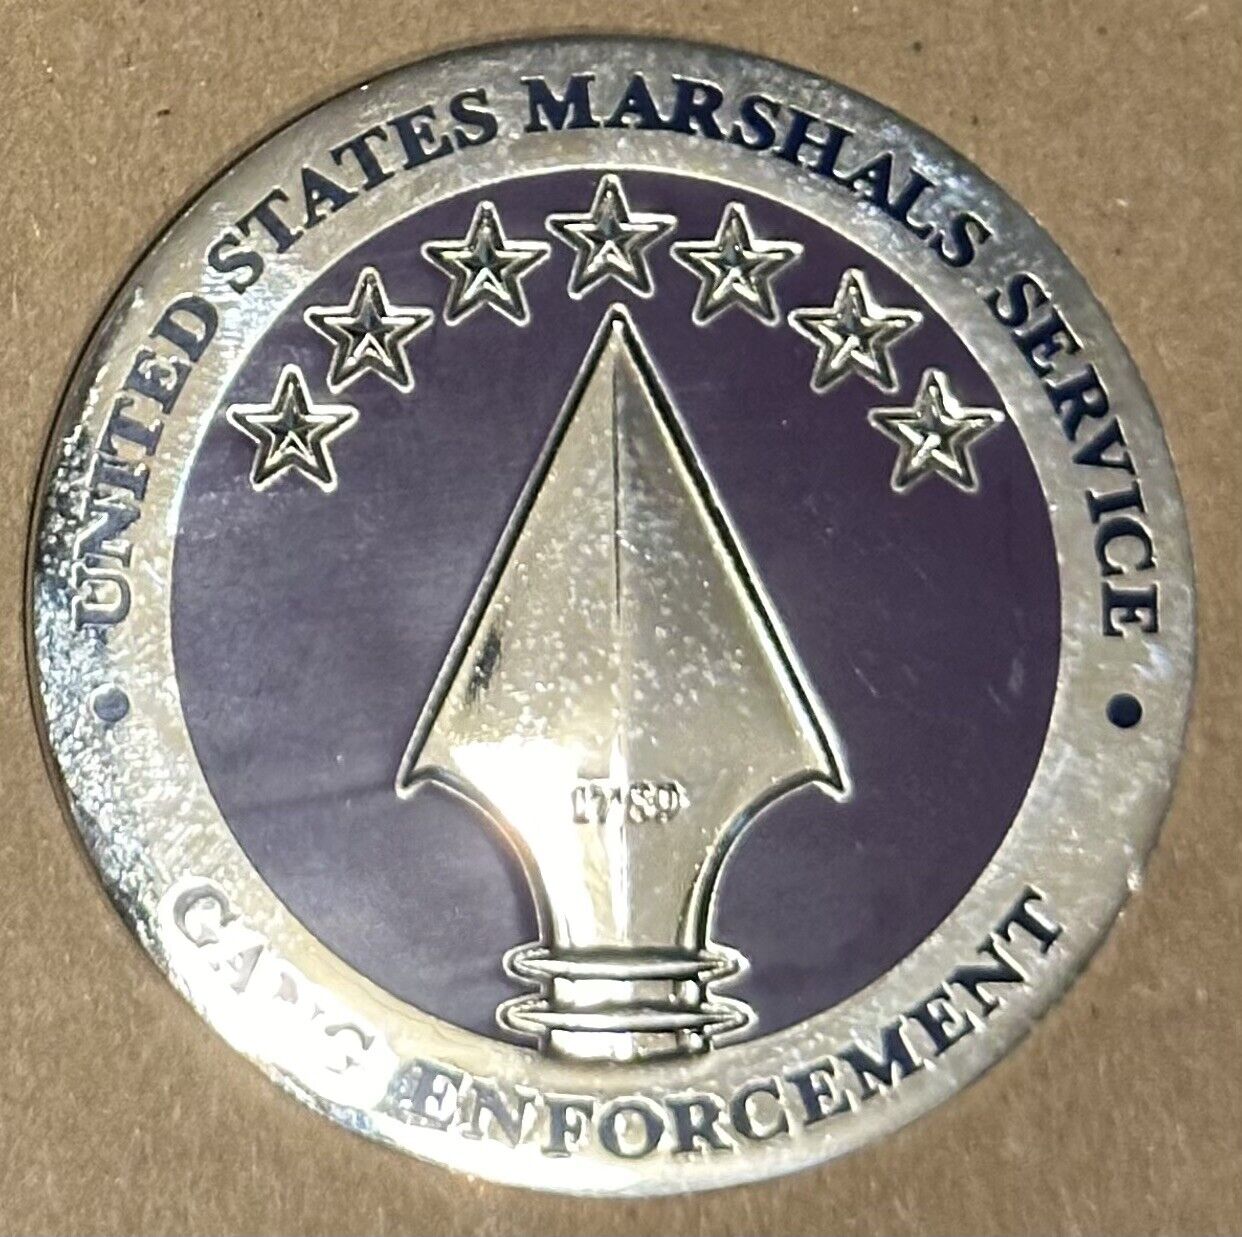 Rare USMS United States Marshals Service Gang Enforcement Purple Variant Coin